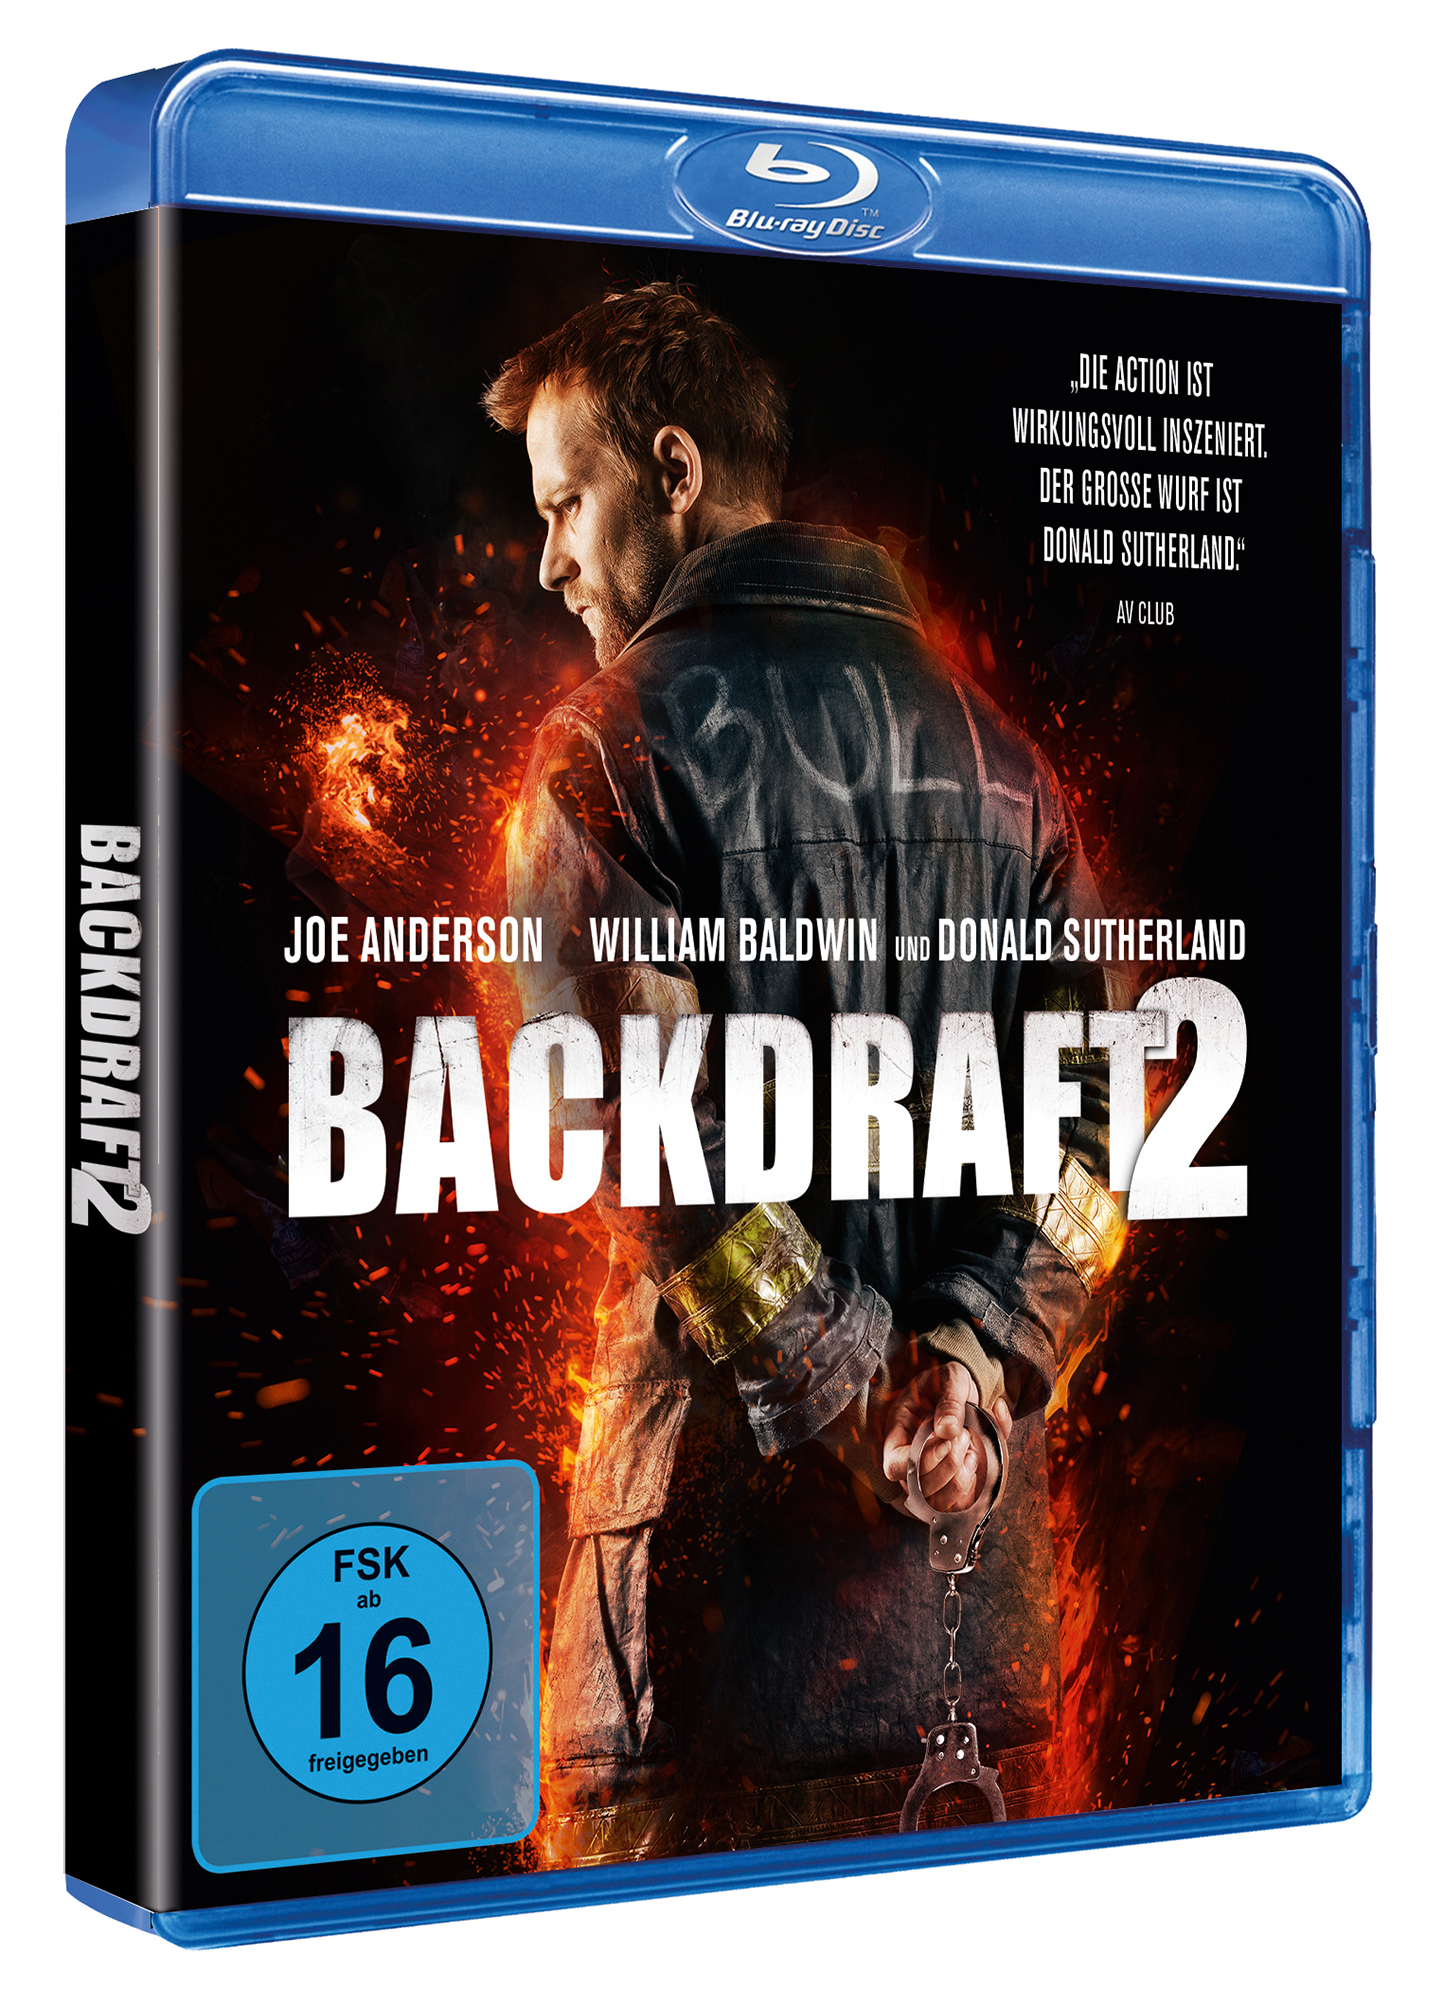 Backdraft 2 (Blu-ray)  Image 2